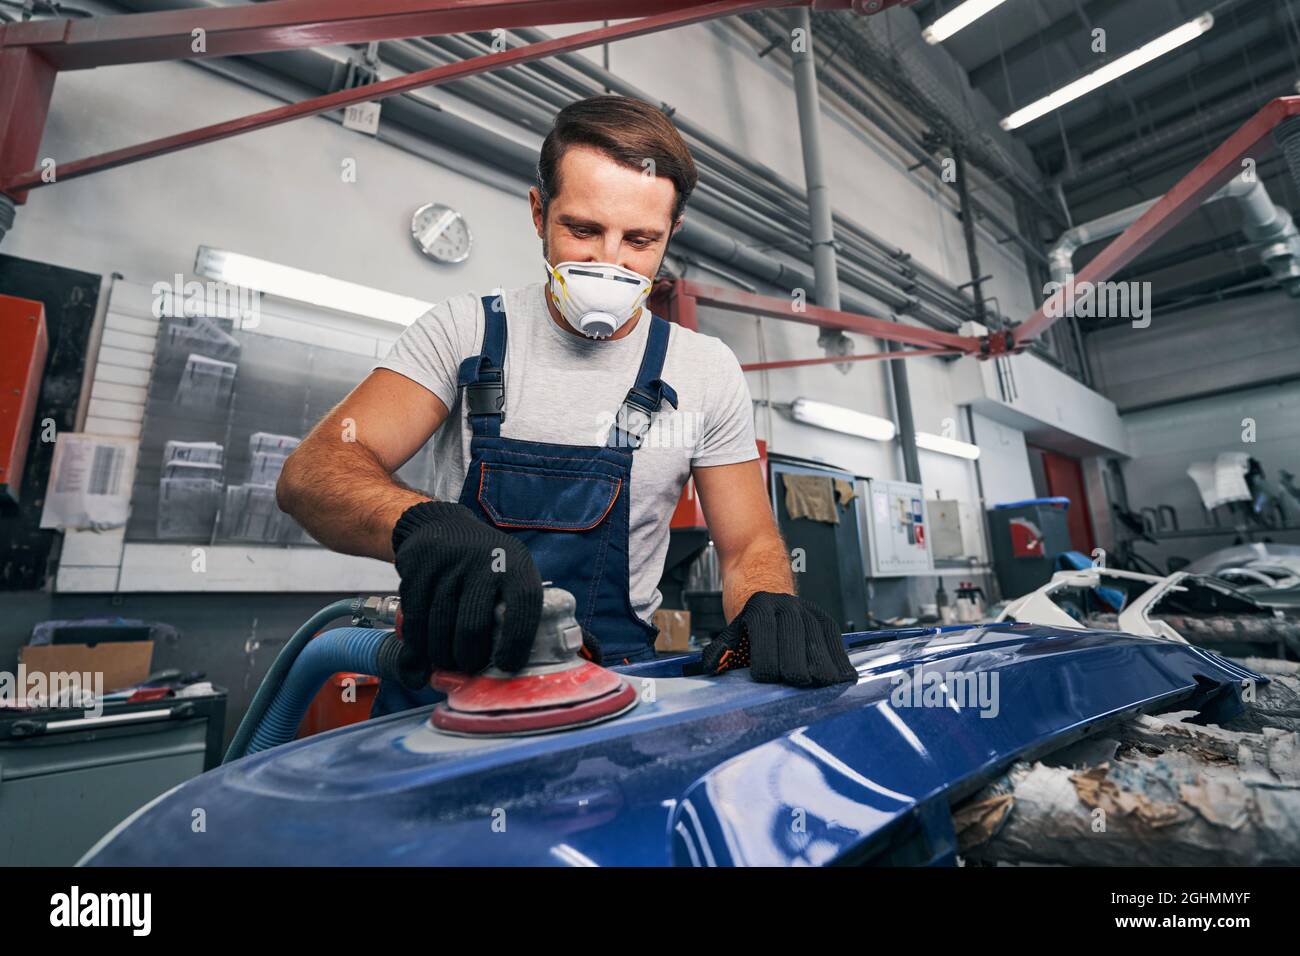 Positive automotive technician grinding automobile body part Stock Photo